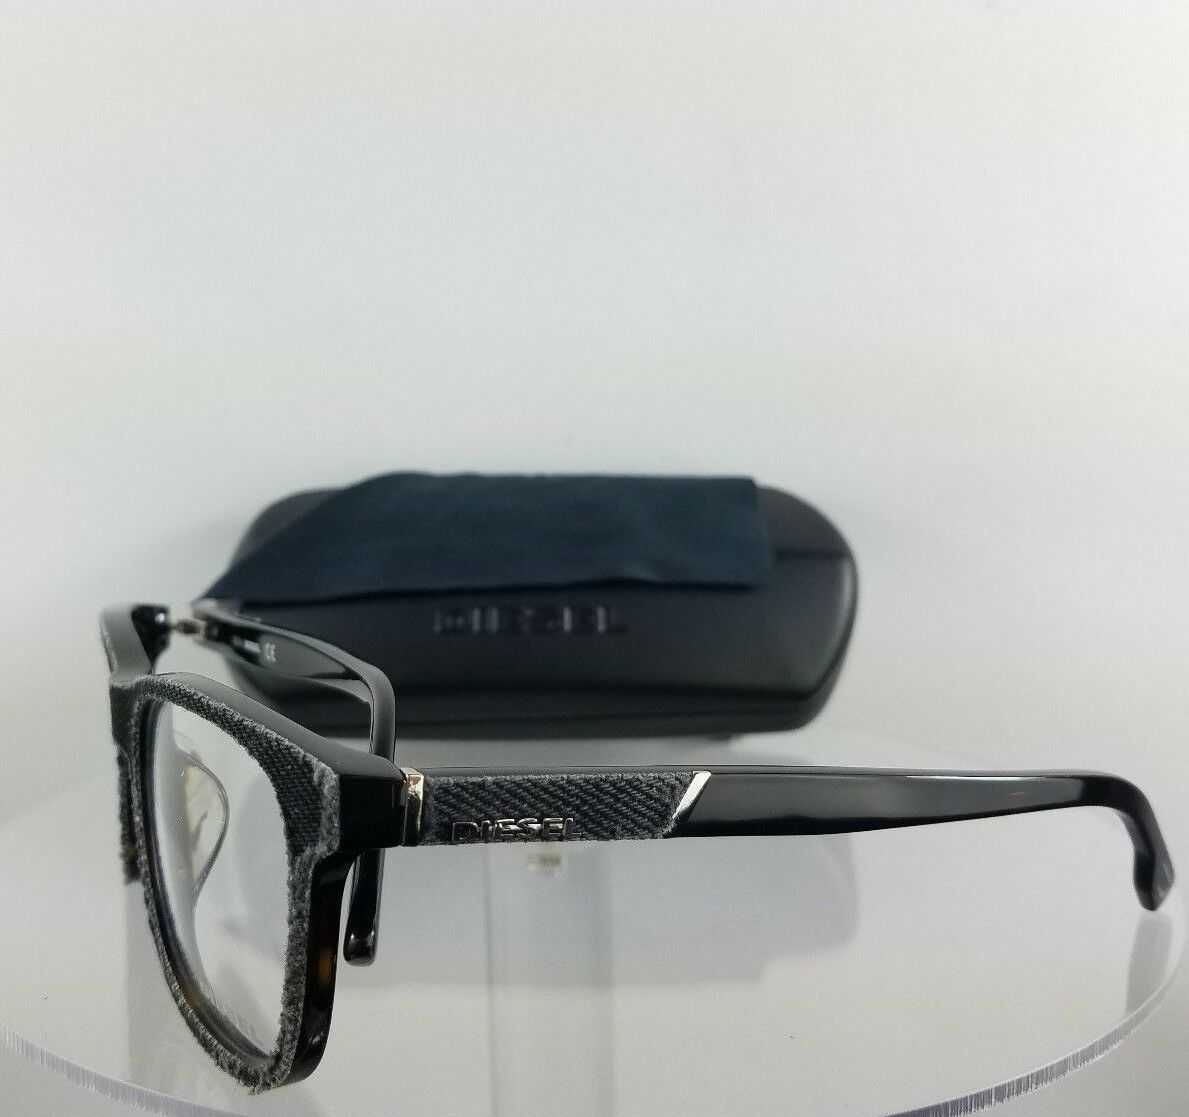 Rame ochelari de vedere unisex Diesel DL5124-F 056